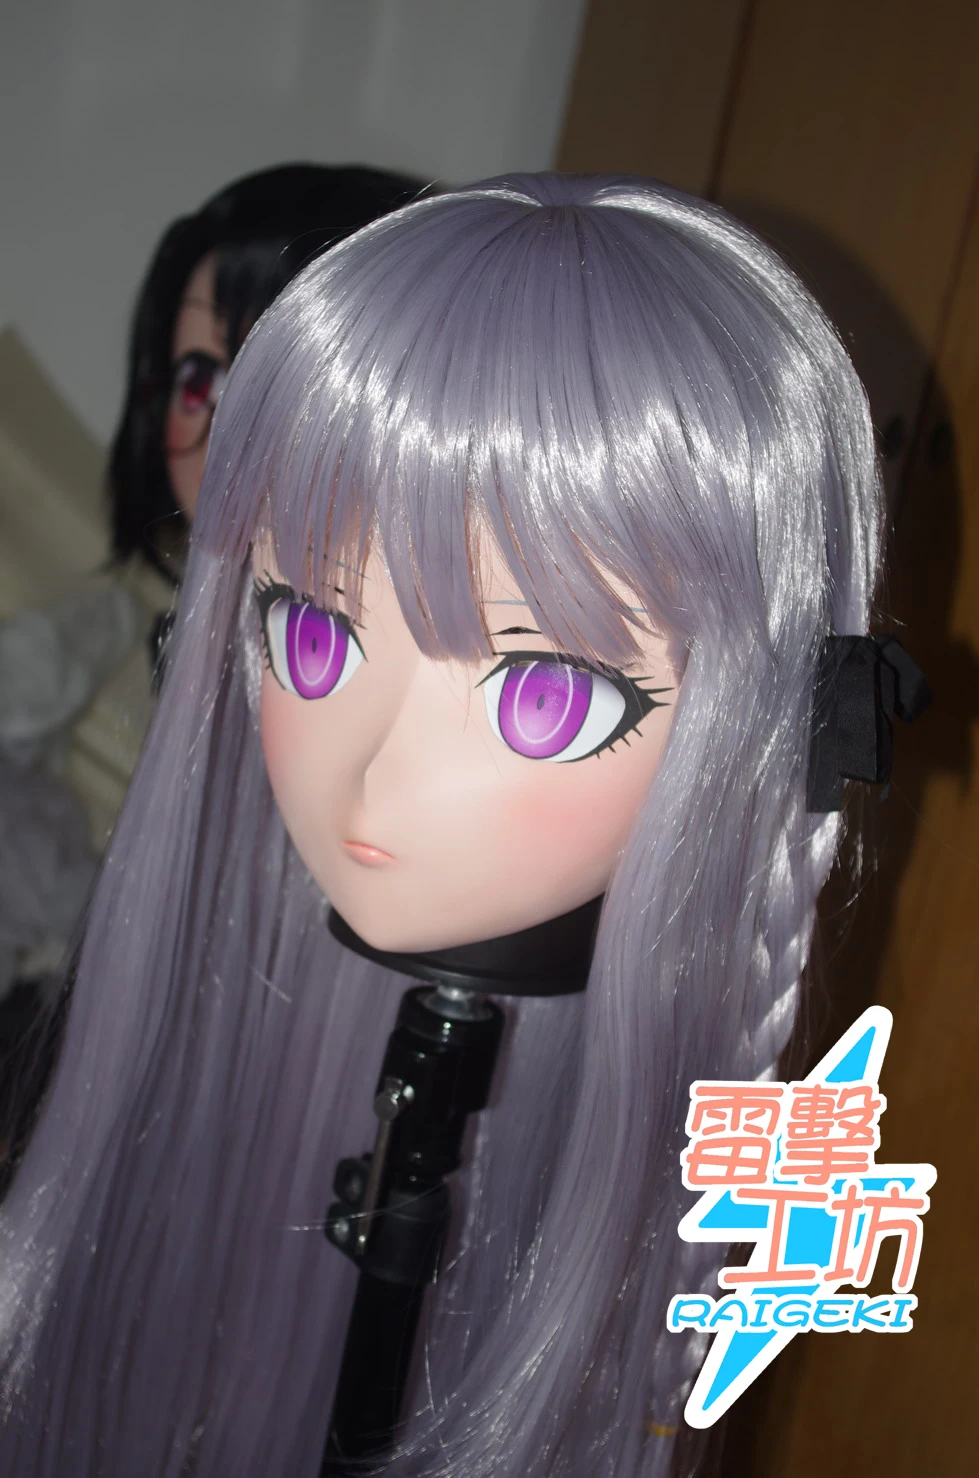 Kigurumi mask doll